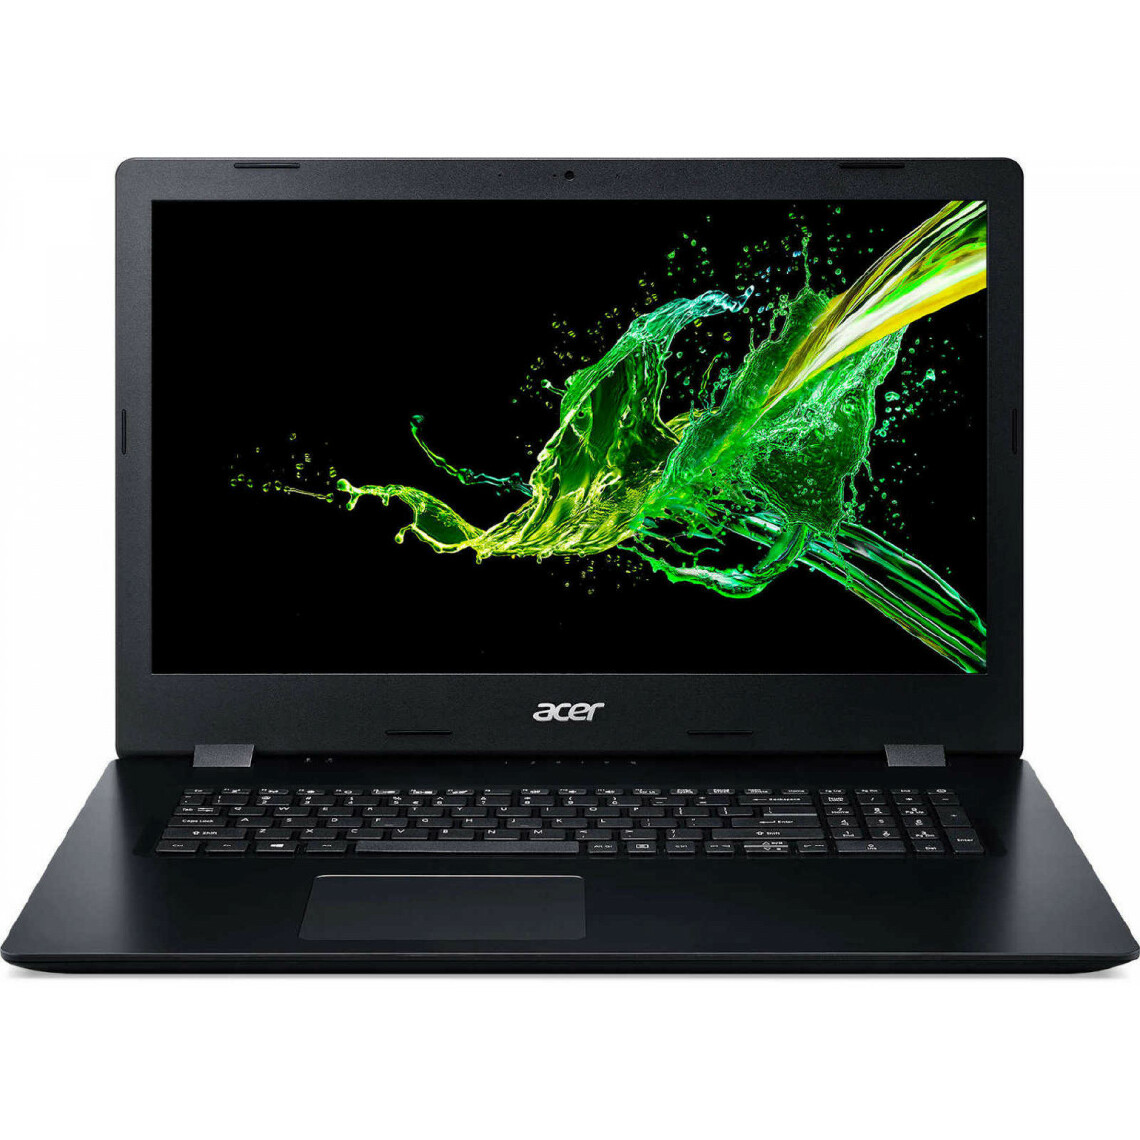 Acer - Ordinateur Portable Acer Aspirea317-52-59ys - PC Portable